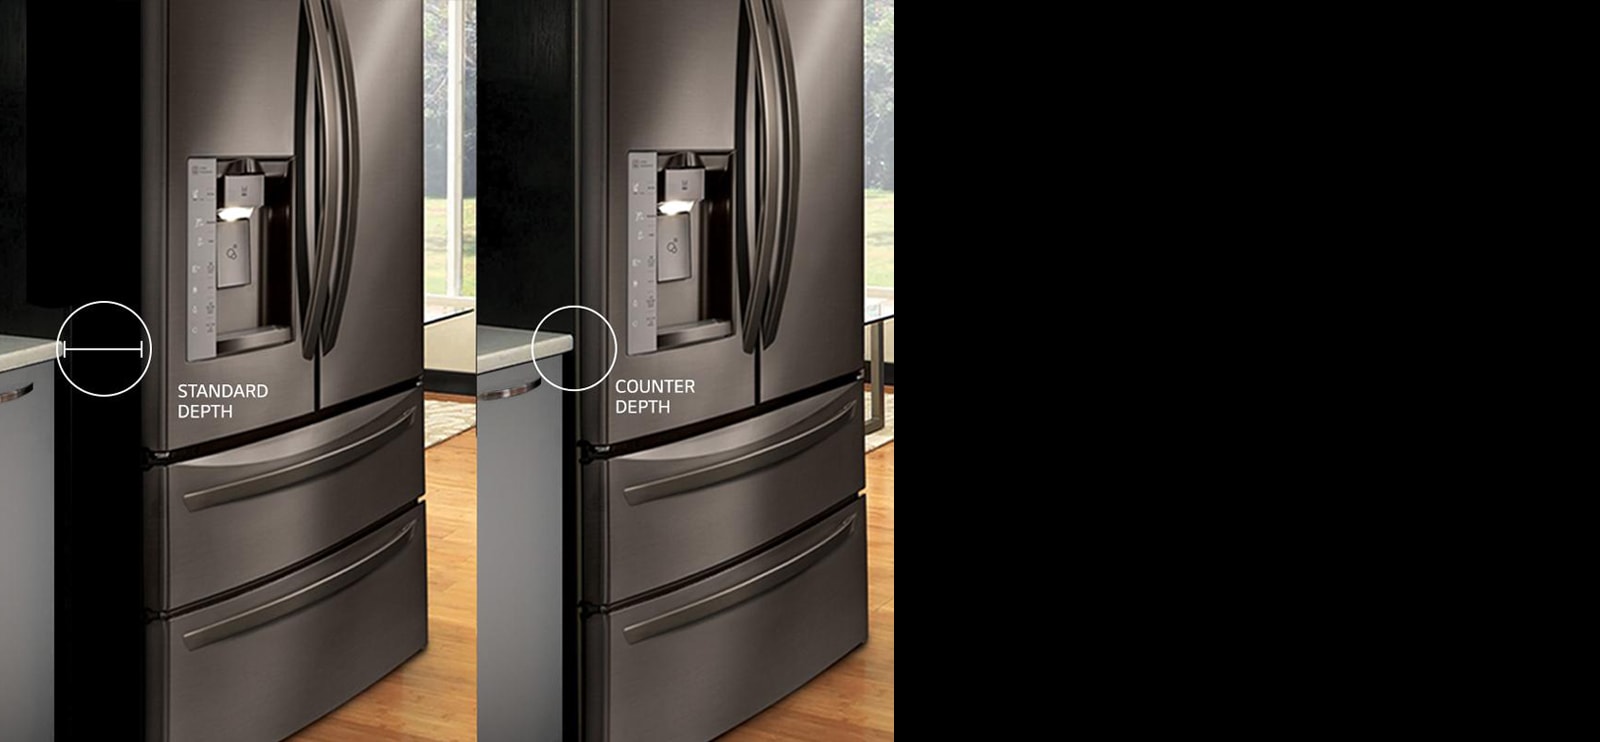 LG Counter Depth Refrigerators With Large Capacity LG USA